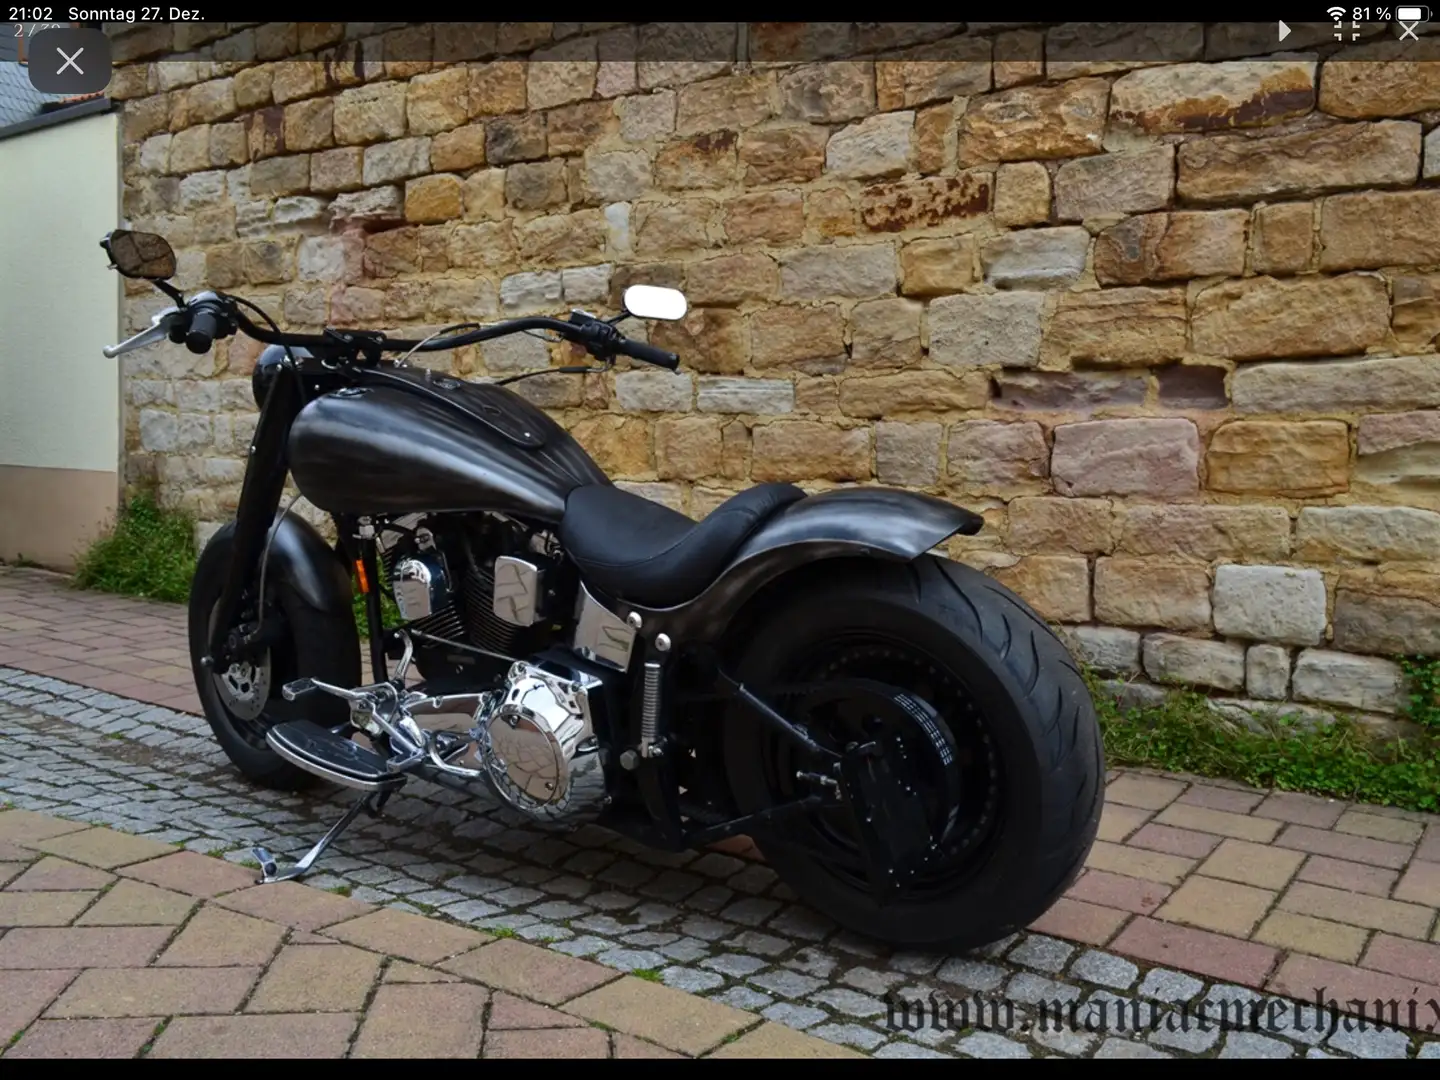 Harley-Davidson Custom Bike FatBoy Evo (Vergaser), Customized, Topp Black - 2